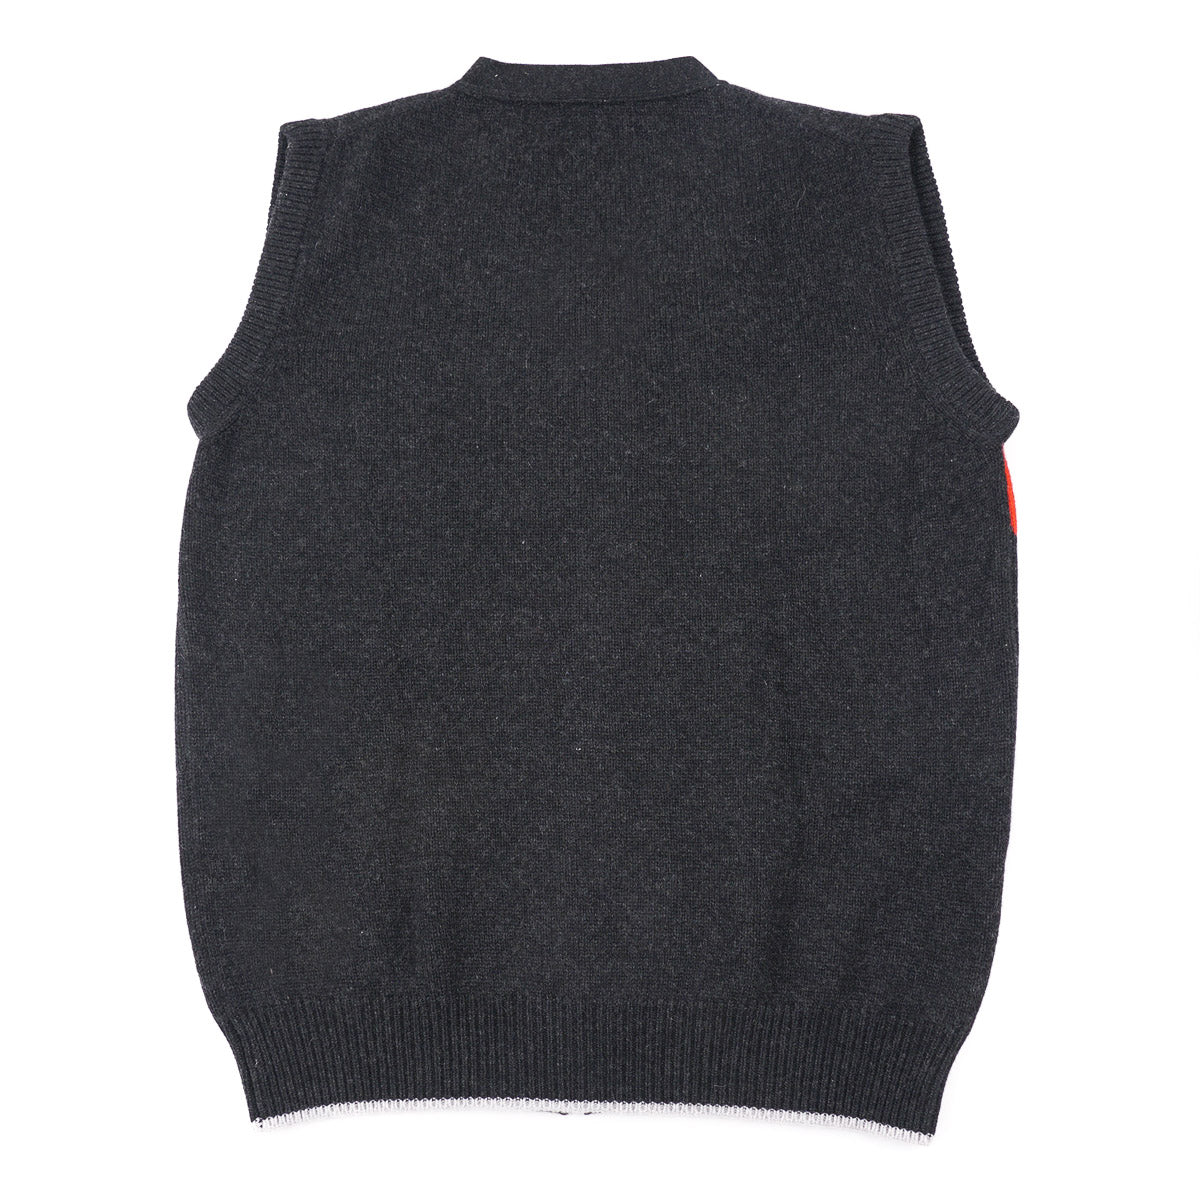 Kiton Cashmere Cardigan Sweater Vest - Top Shelf Apparel